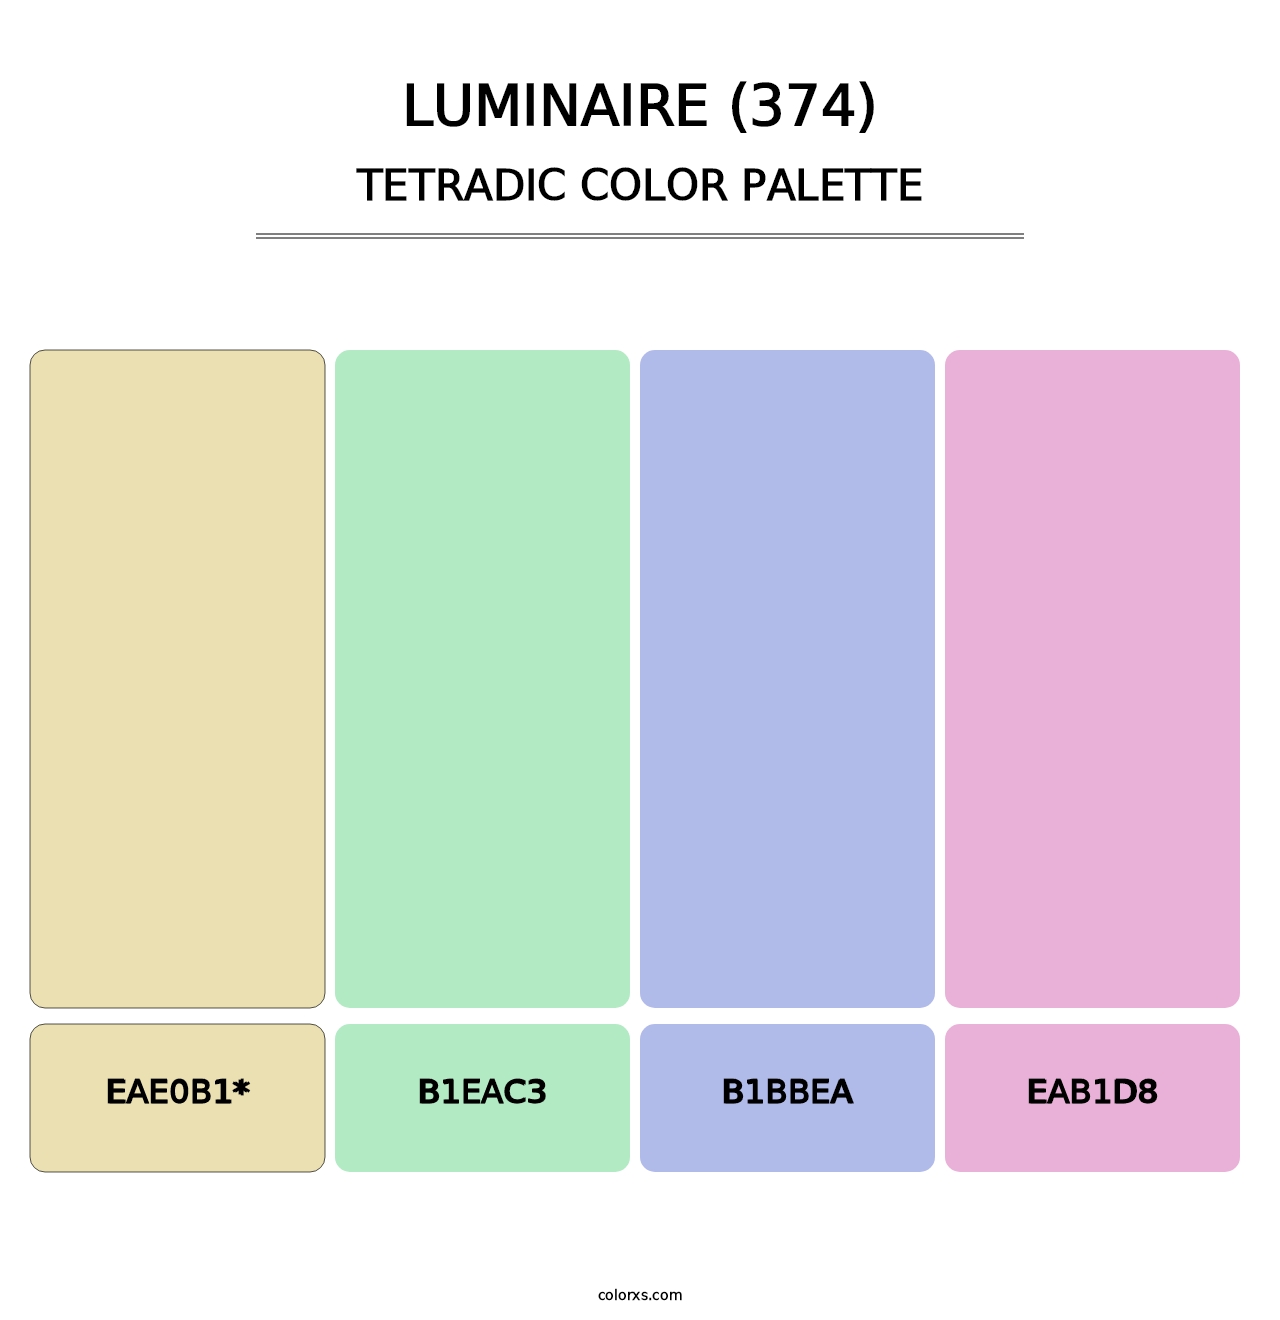 Luminaire (374) - Tetradic Color Palette